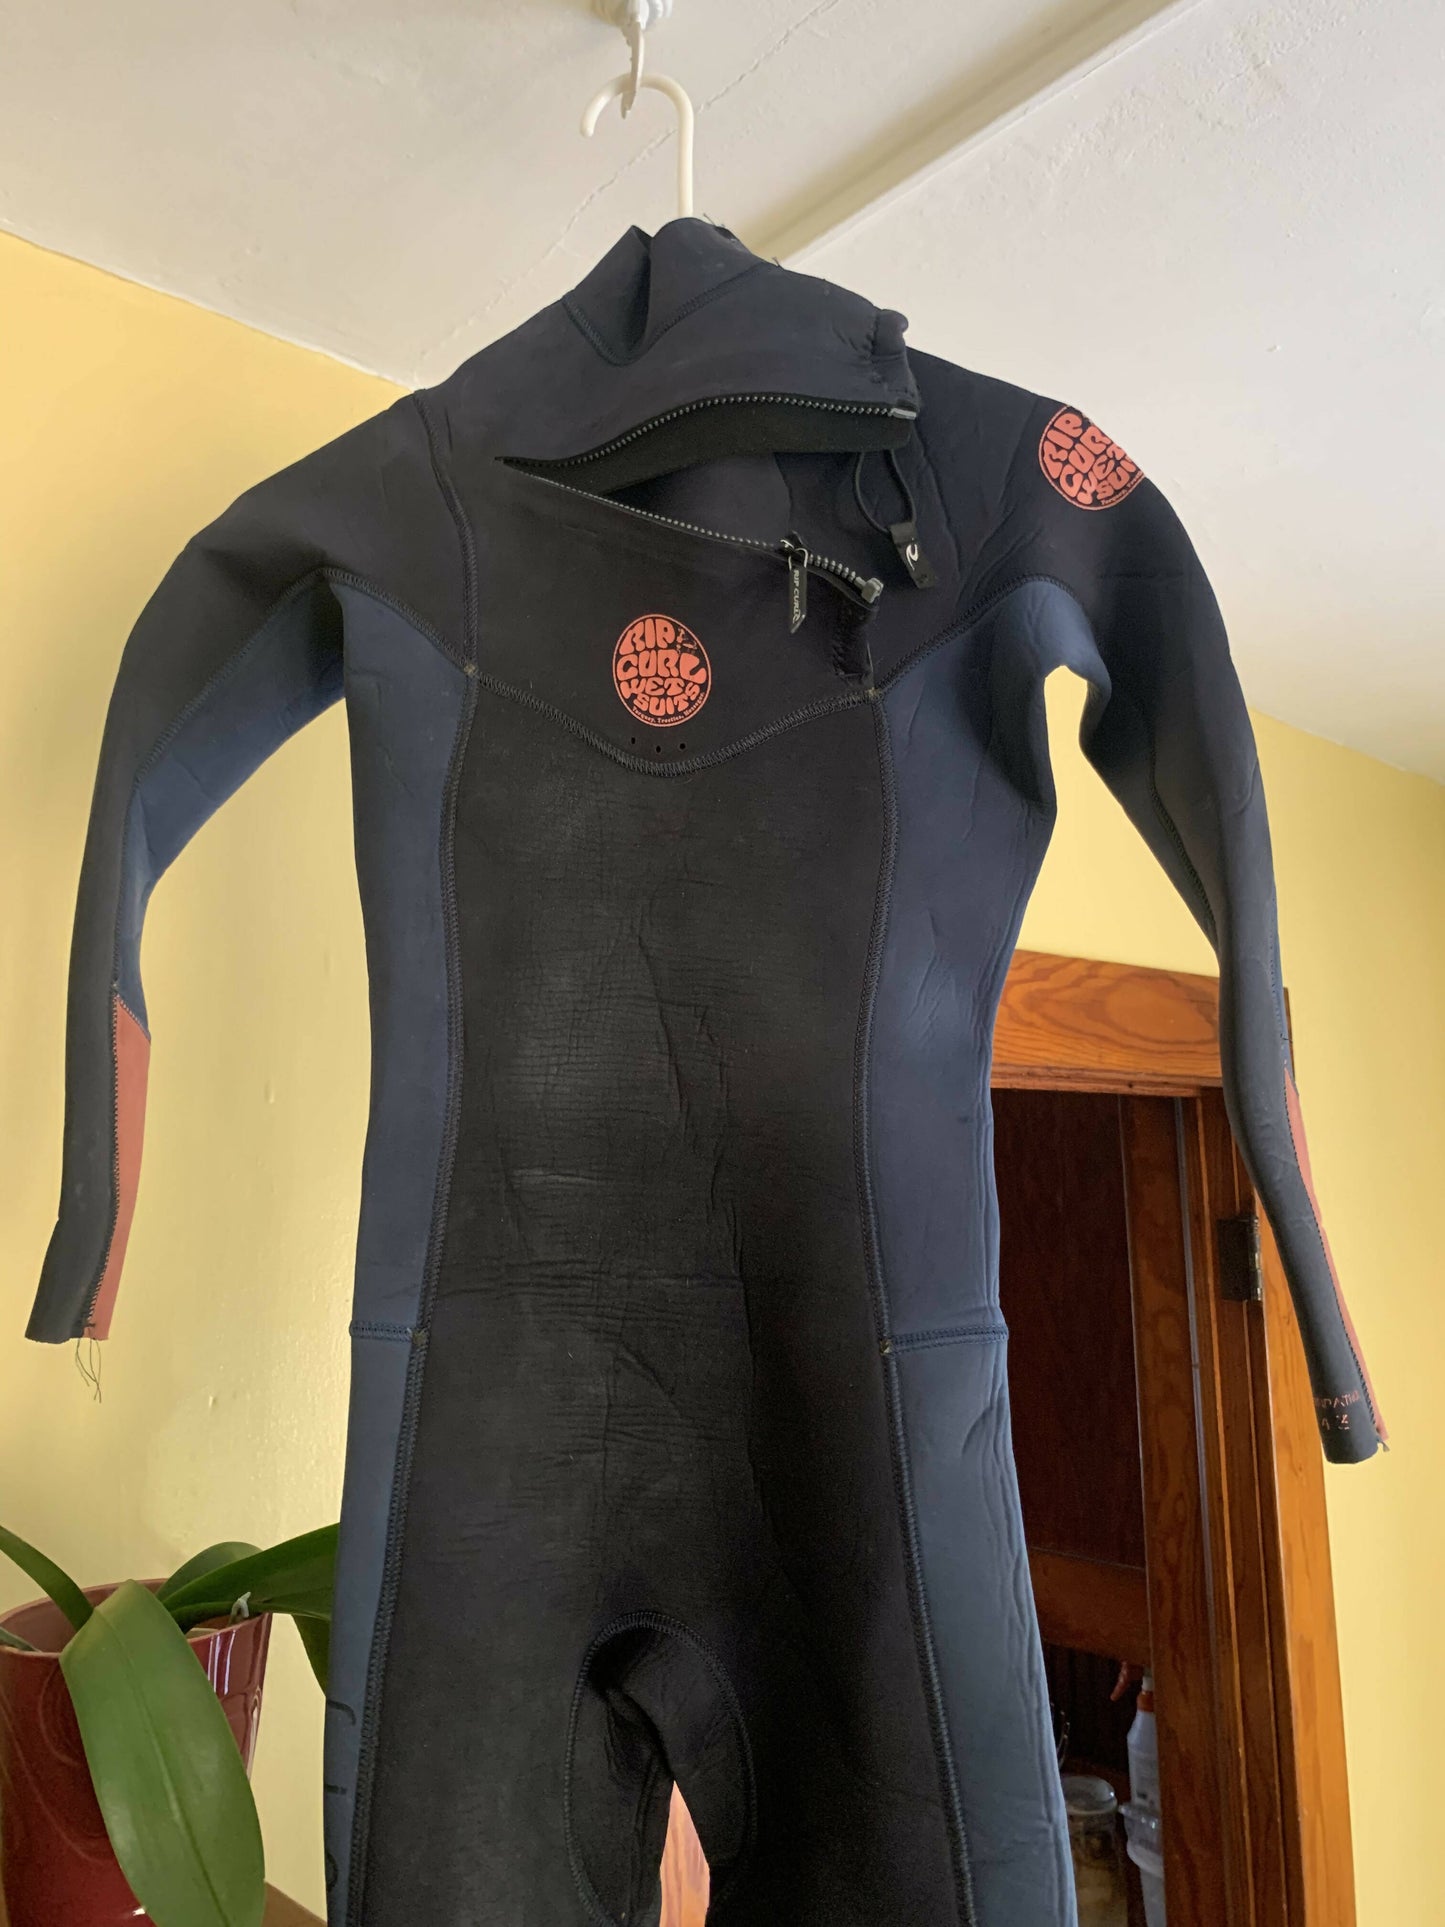 Ripcurl Dawn Patrol 4/3 wetsuit. Size 4